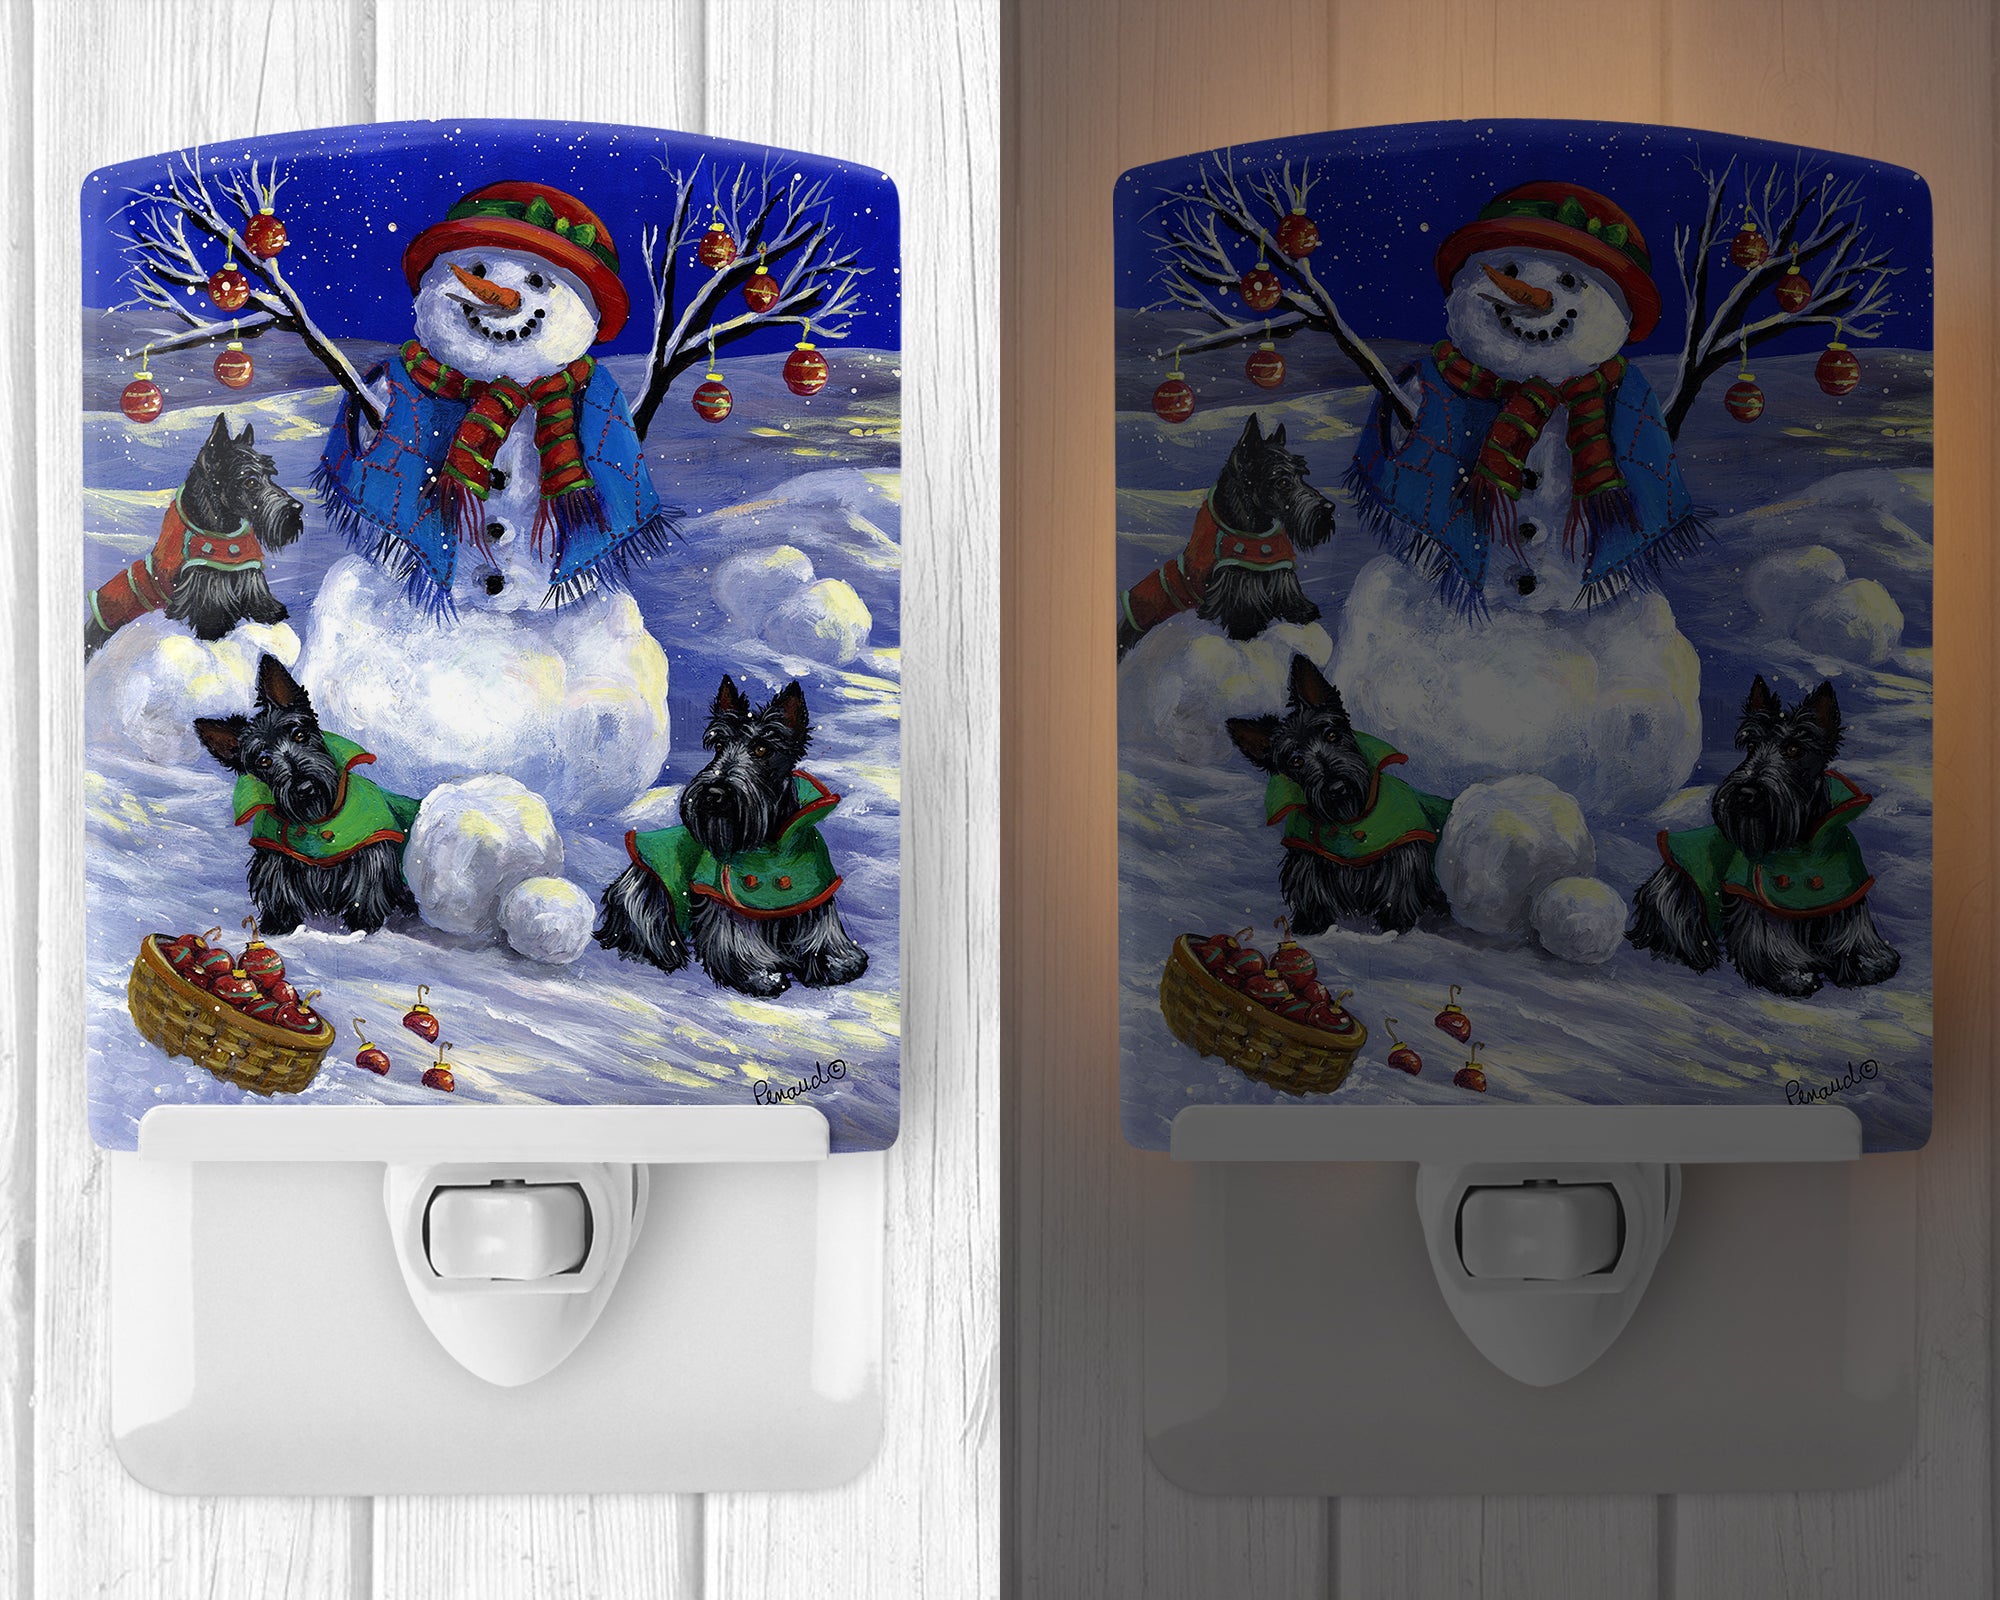 Scottie Christmas Snowman Ceramic Night Light PPP3184CNL - the-store.com